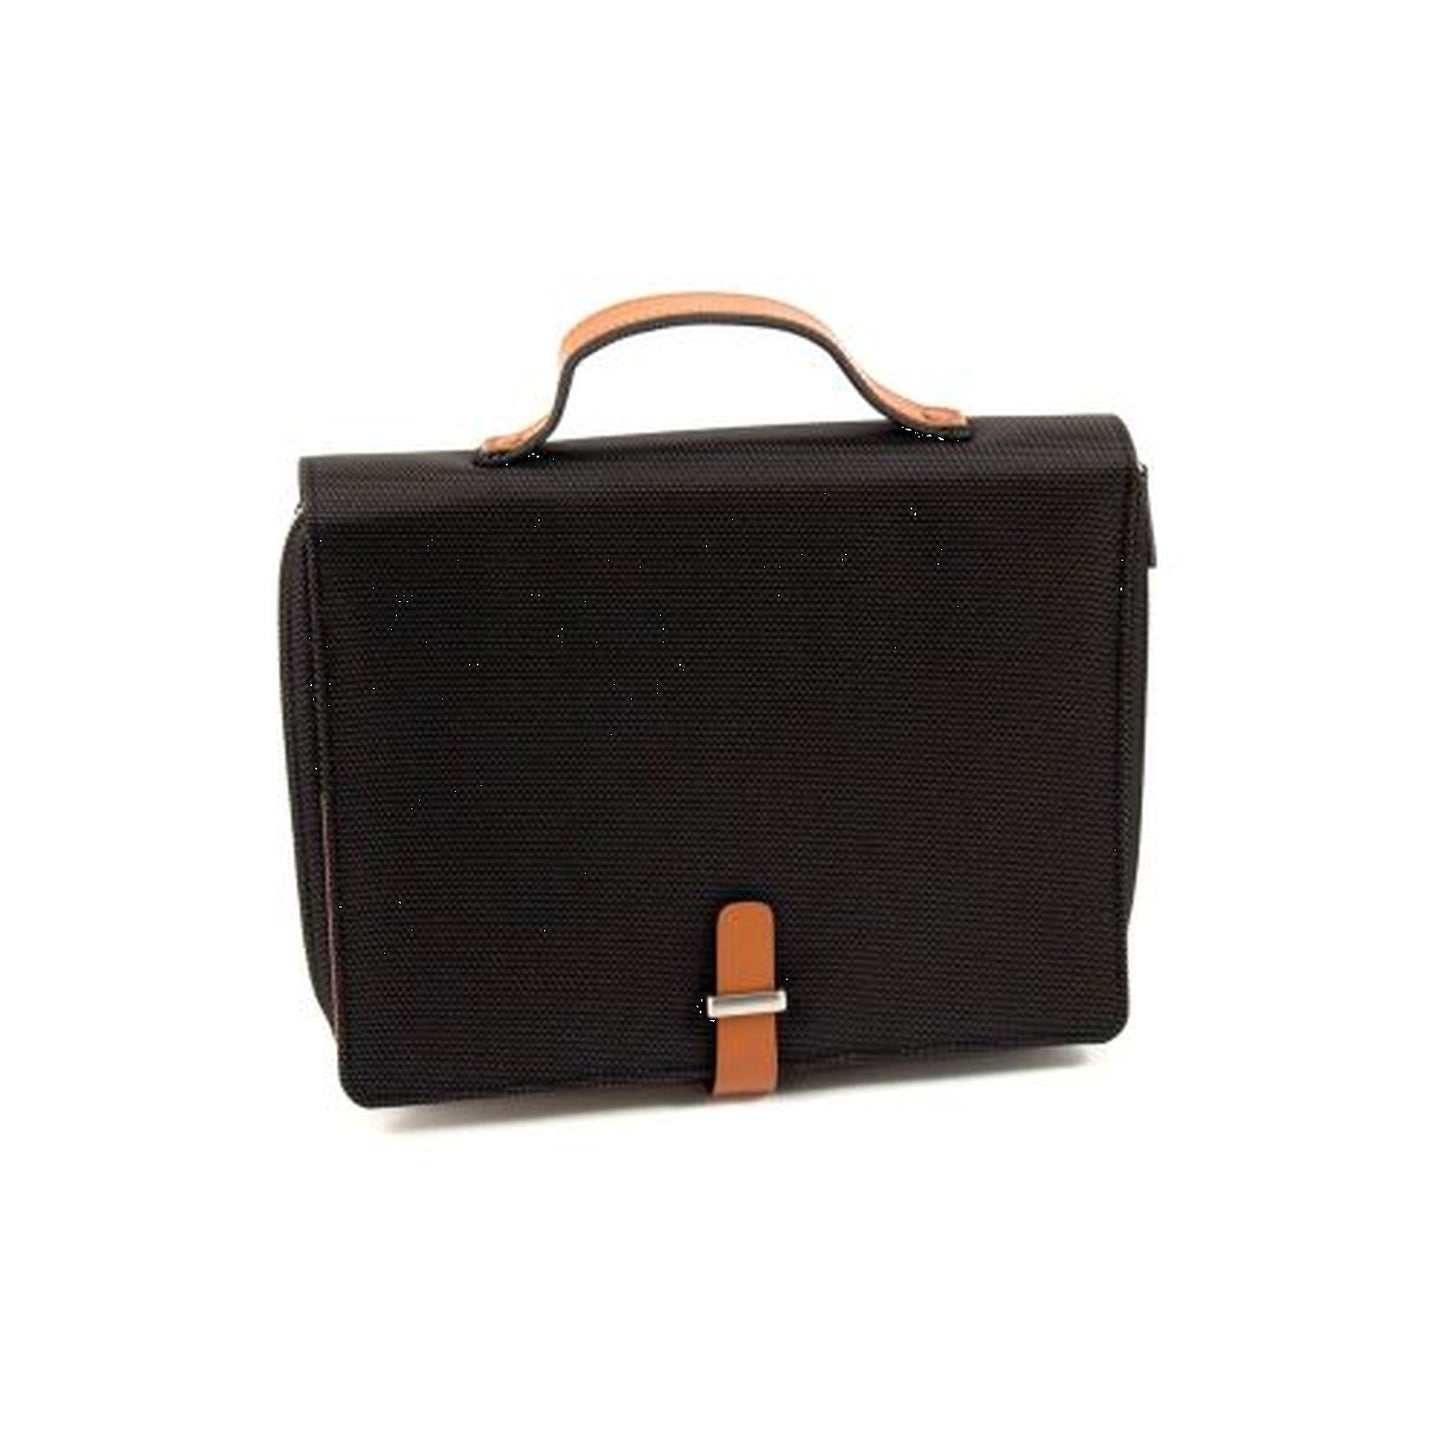 Saddle Leather & Ballistic Nylon Tablet Carrying Case